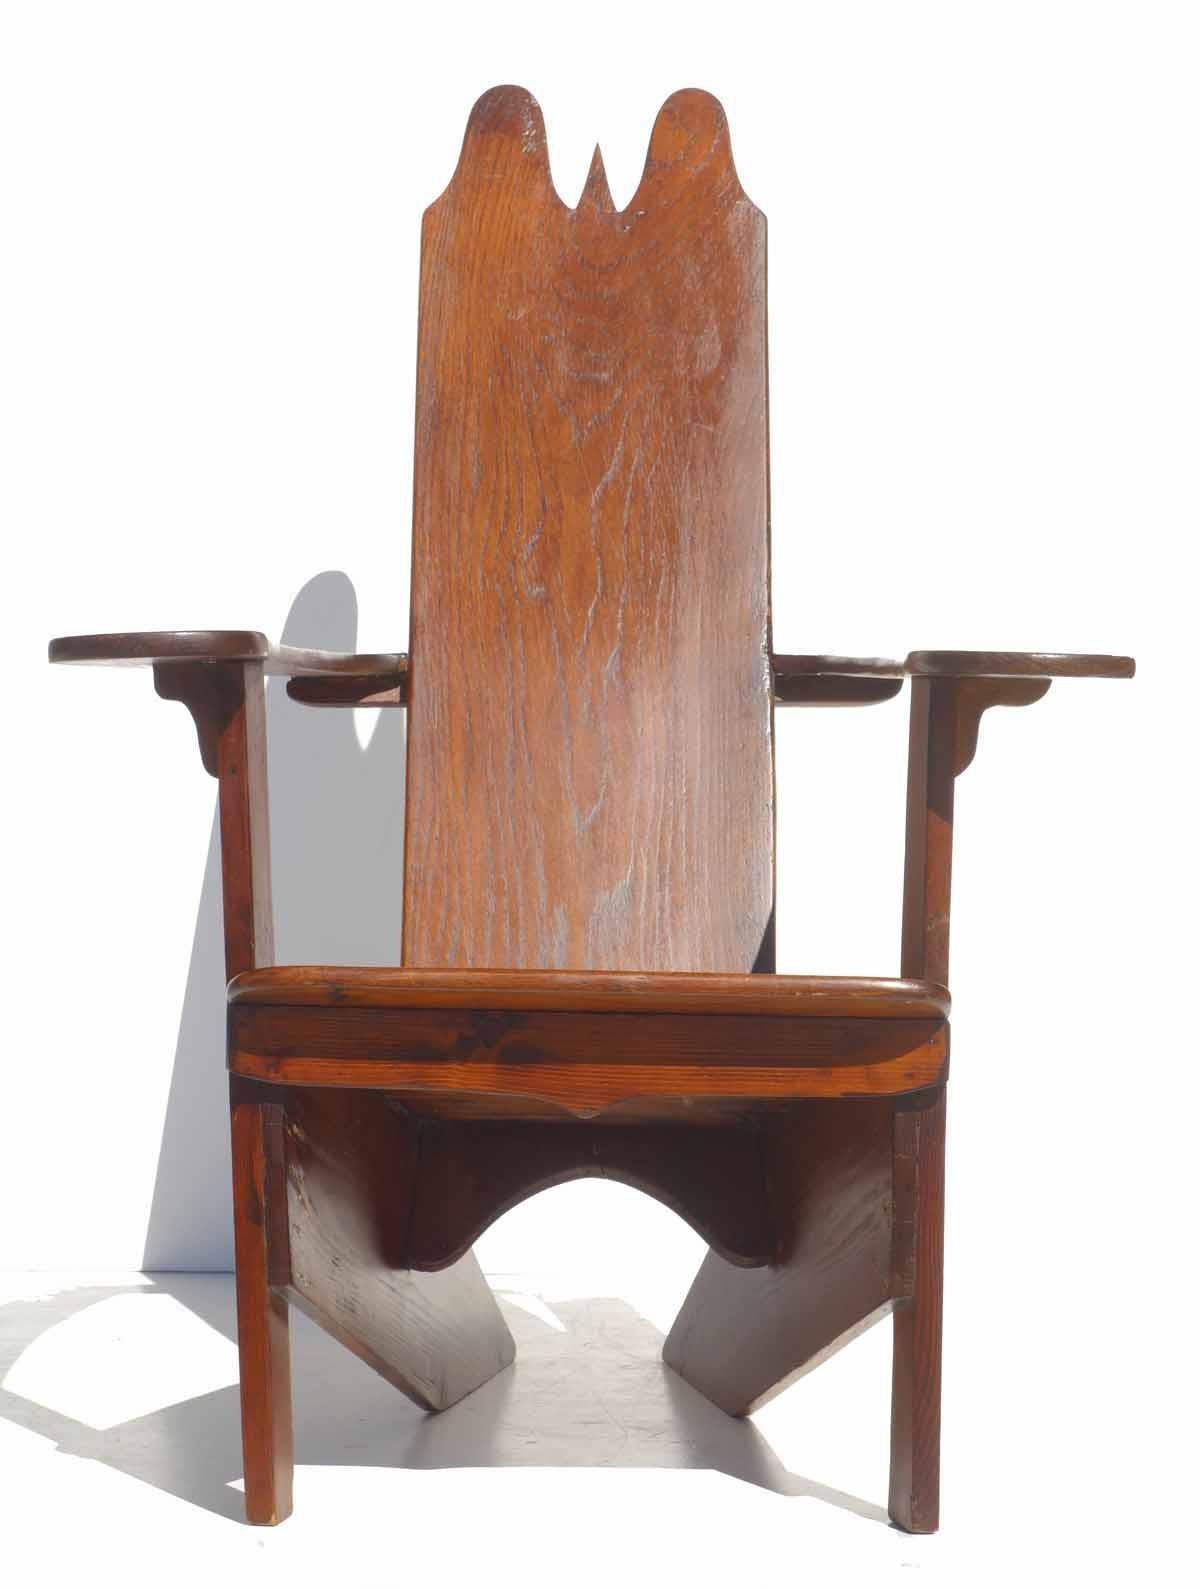 Rare chaise longue rationaliste
Italie, 1927.